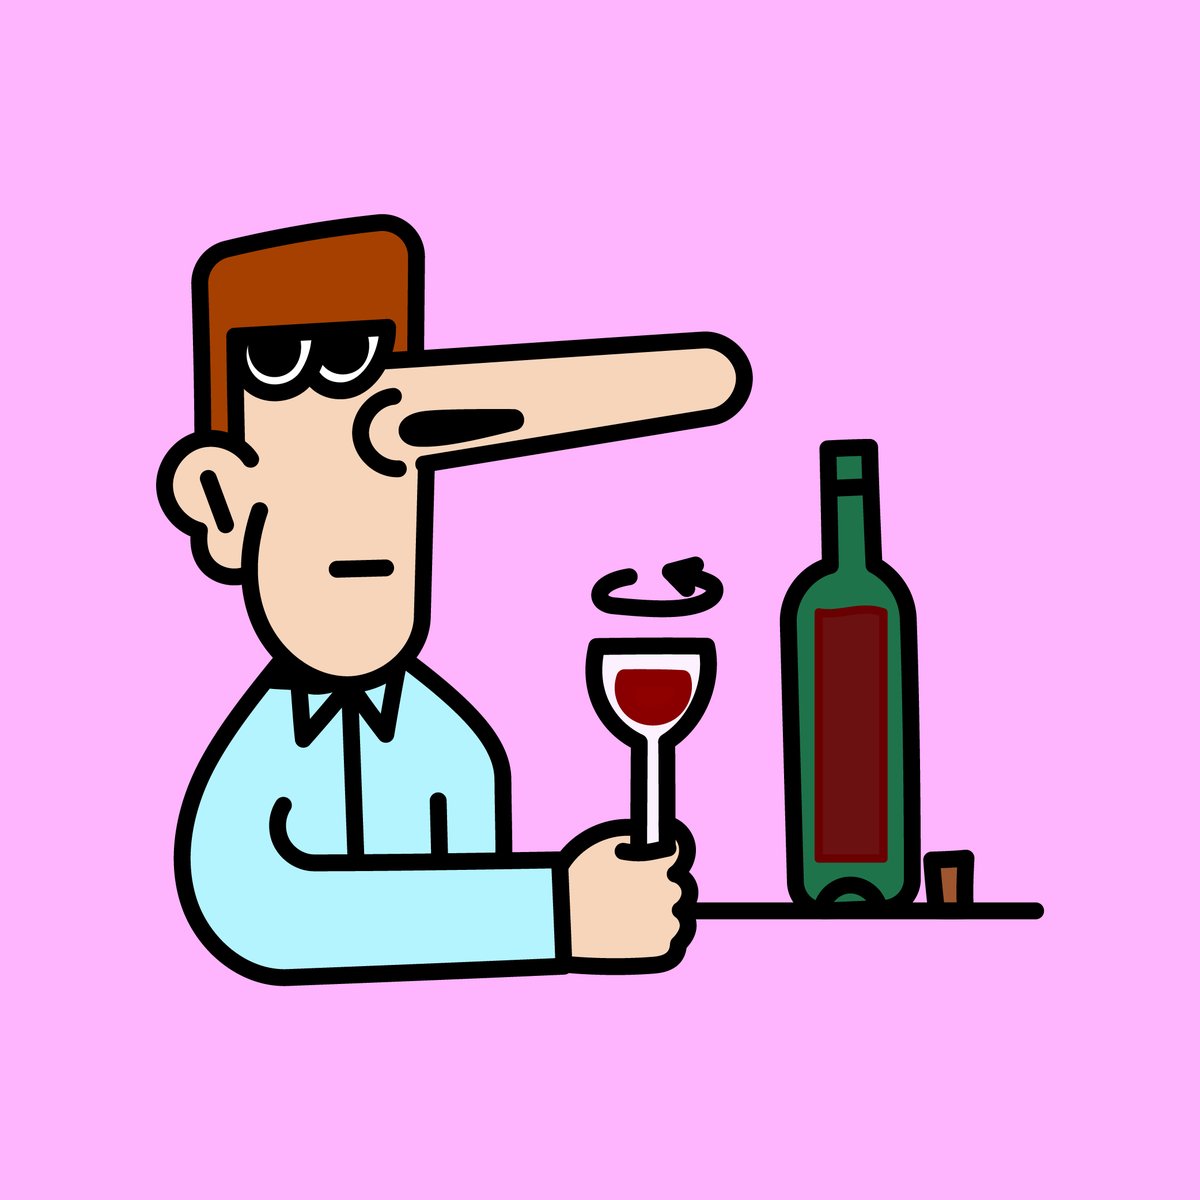 100 illustrations - 2/day
2/100 - Winetaster 🍷

#illustration #Happiness #vectorart #djidji #drawing #Doodles #cartoon #illustrationart #NFTs #NFTArts #wine